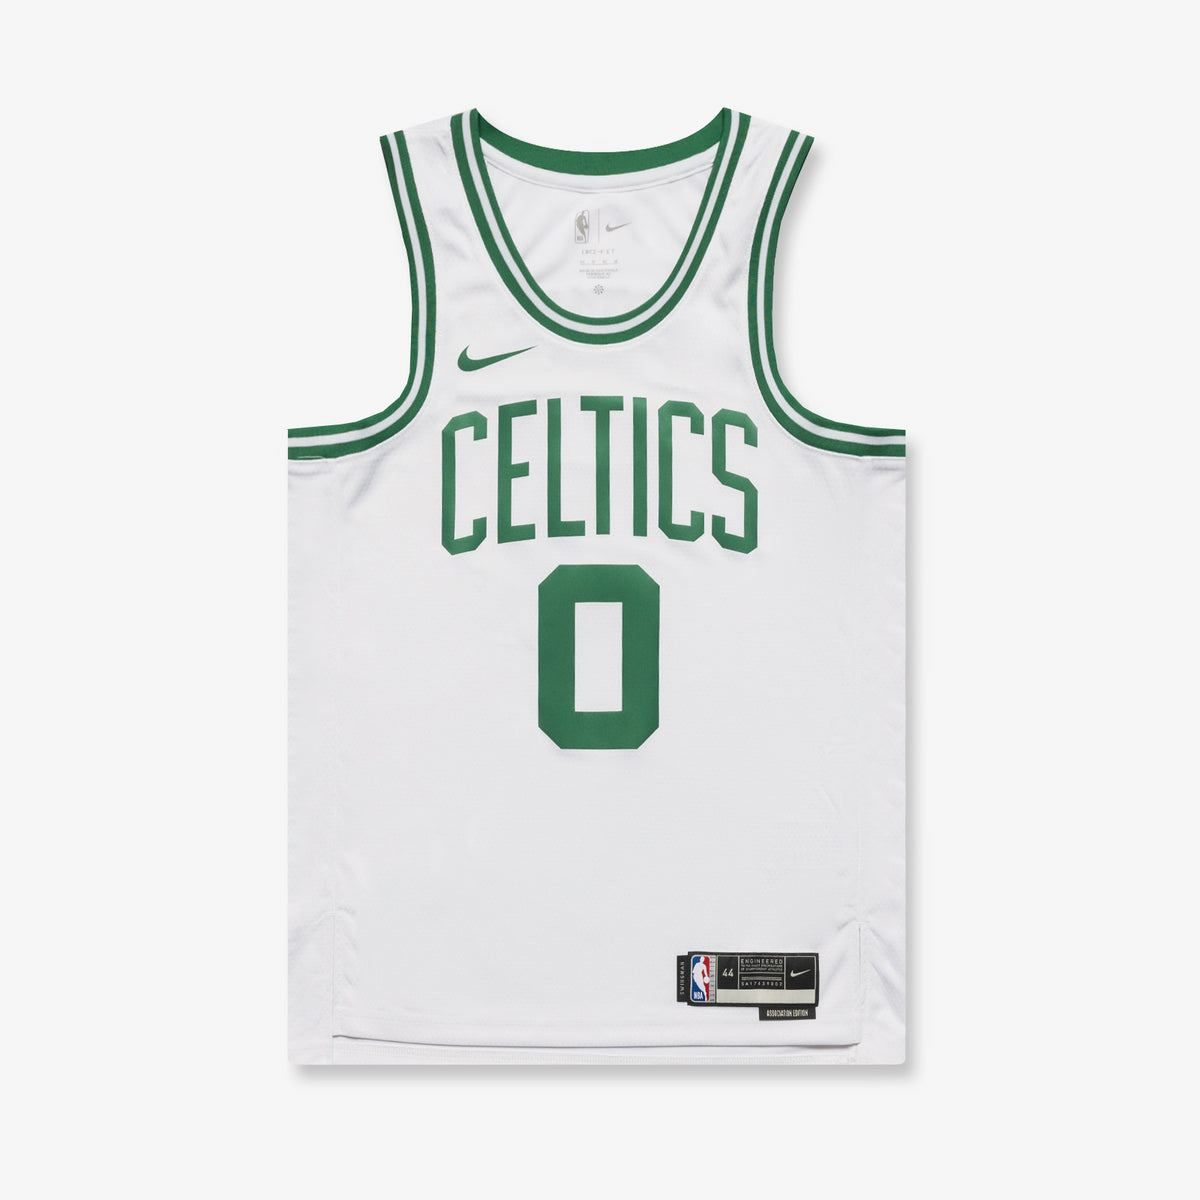 Youth M (10/12) Nike Boston Celtics Statement Edition Team Swingman Jersey